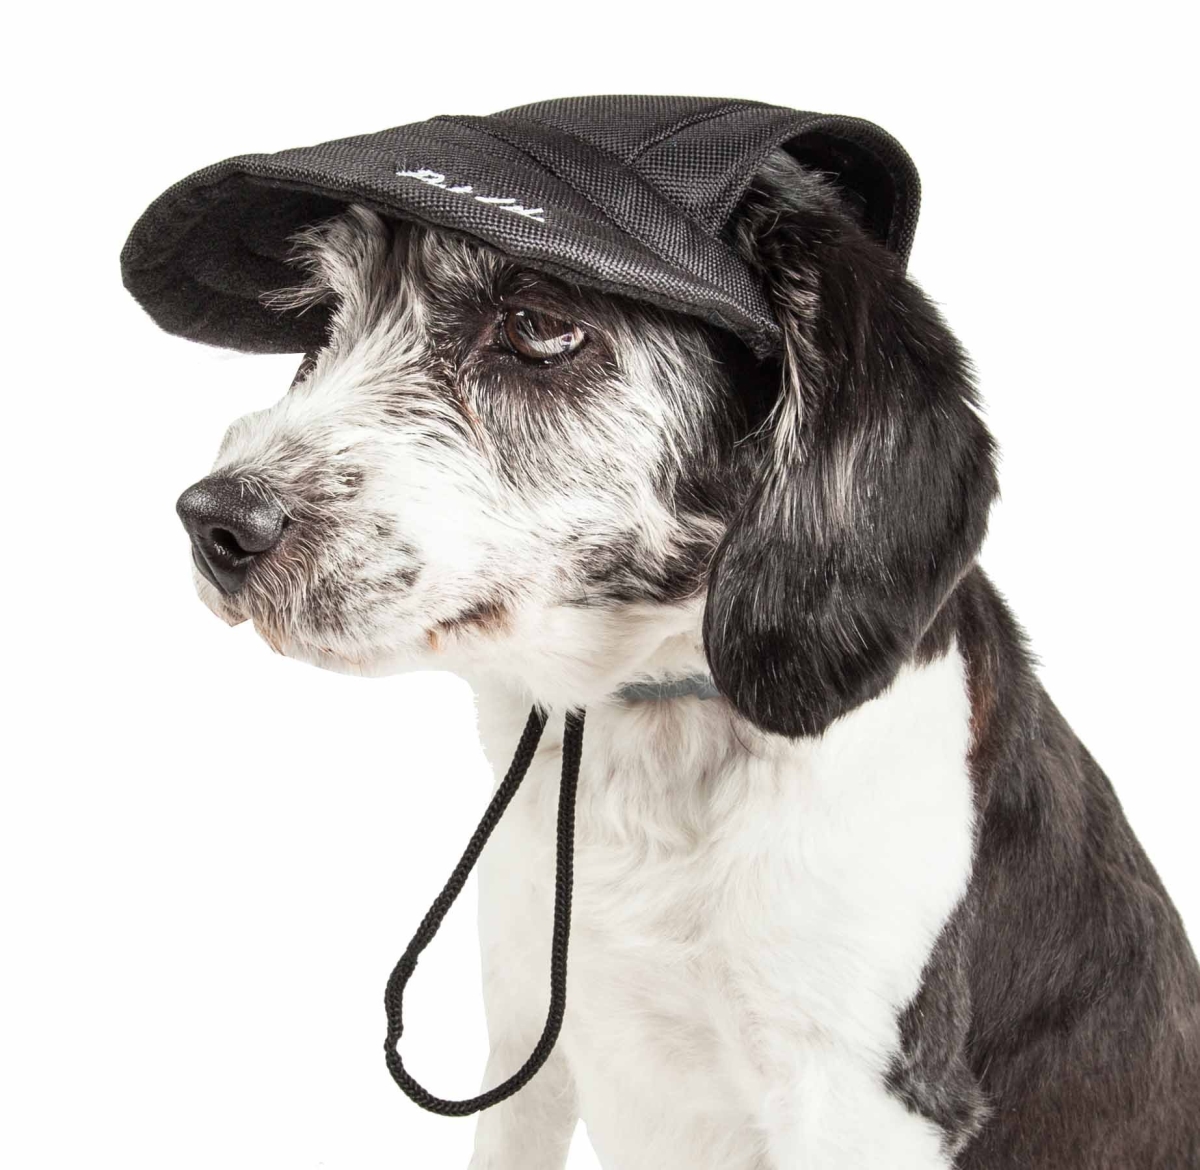 Picture of Pet Life HT6BKLG Cap-Tivating UV Protectant Adjustable Fashion Dog Hat - Jet Black, Large